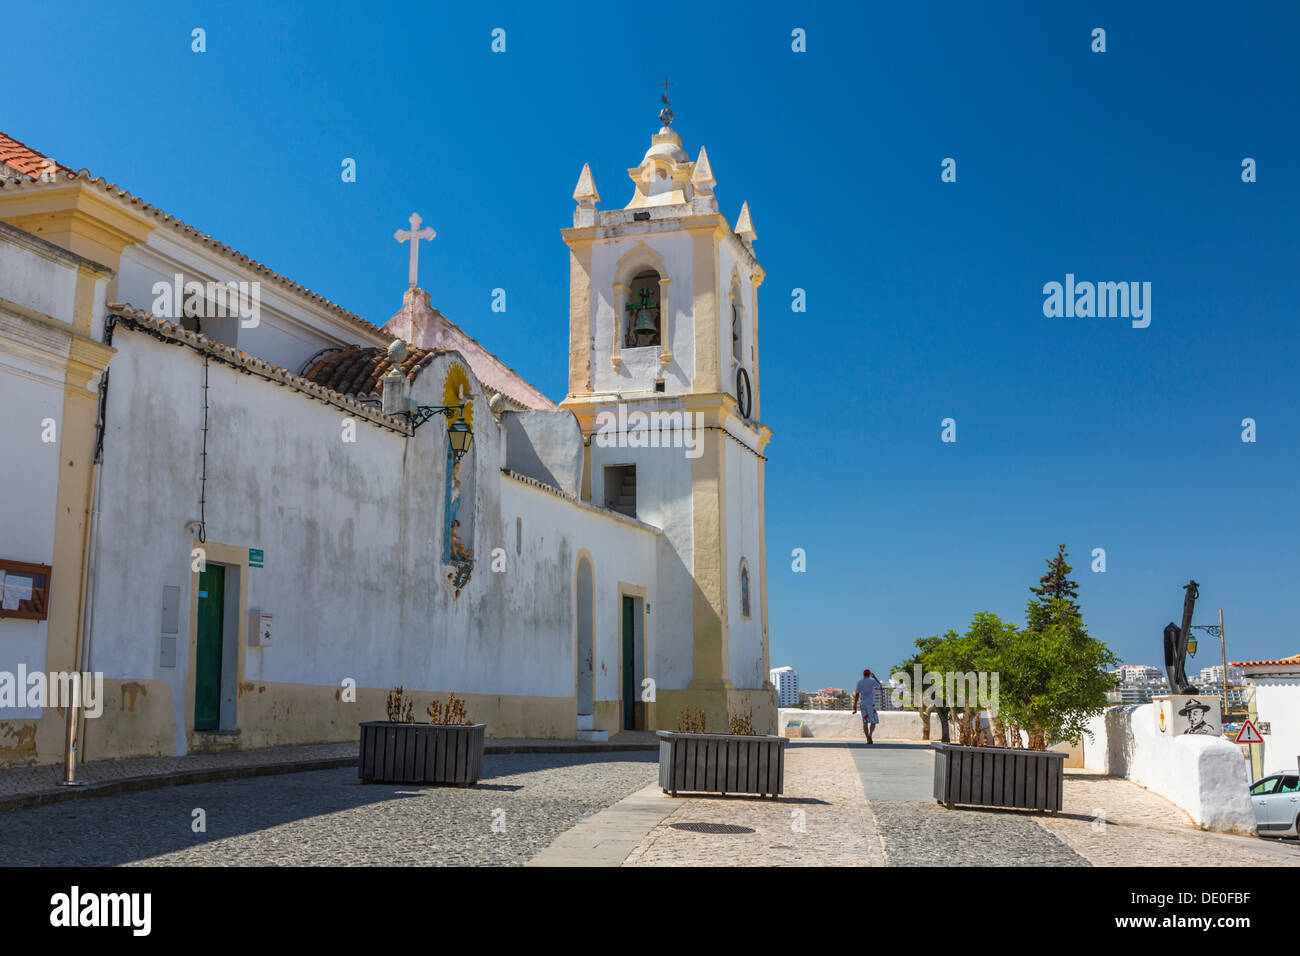 Church of Nossa Senhora da Conceicao, church of Our Lady of Conception, fishing village of Ferragudo, Algarve, Portugal, Europe Stock Photo